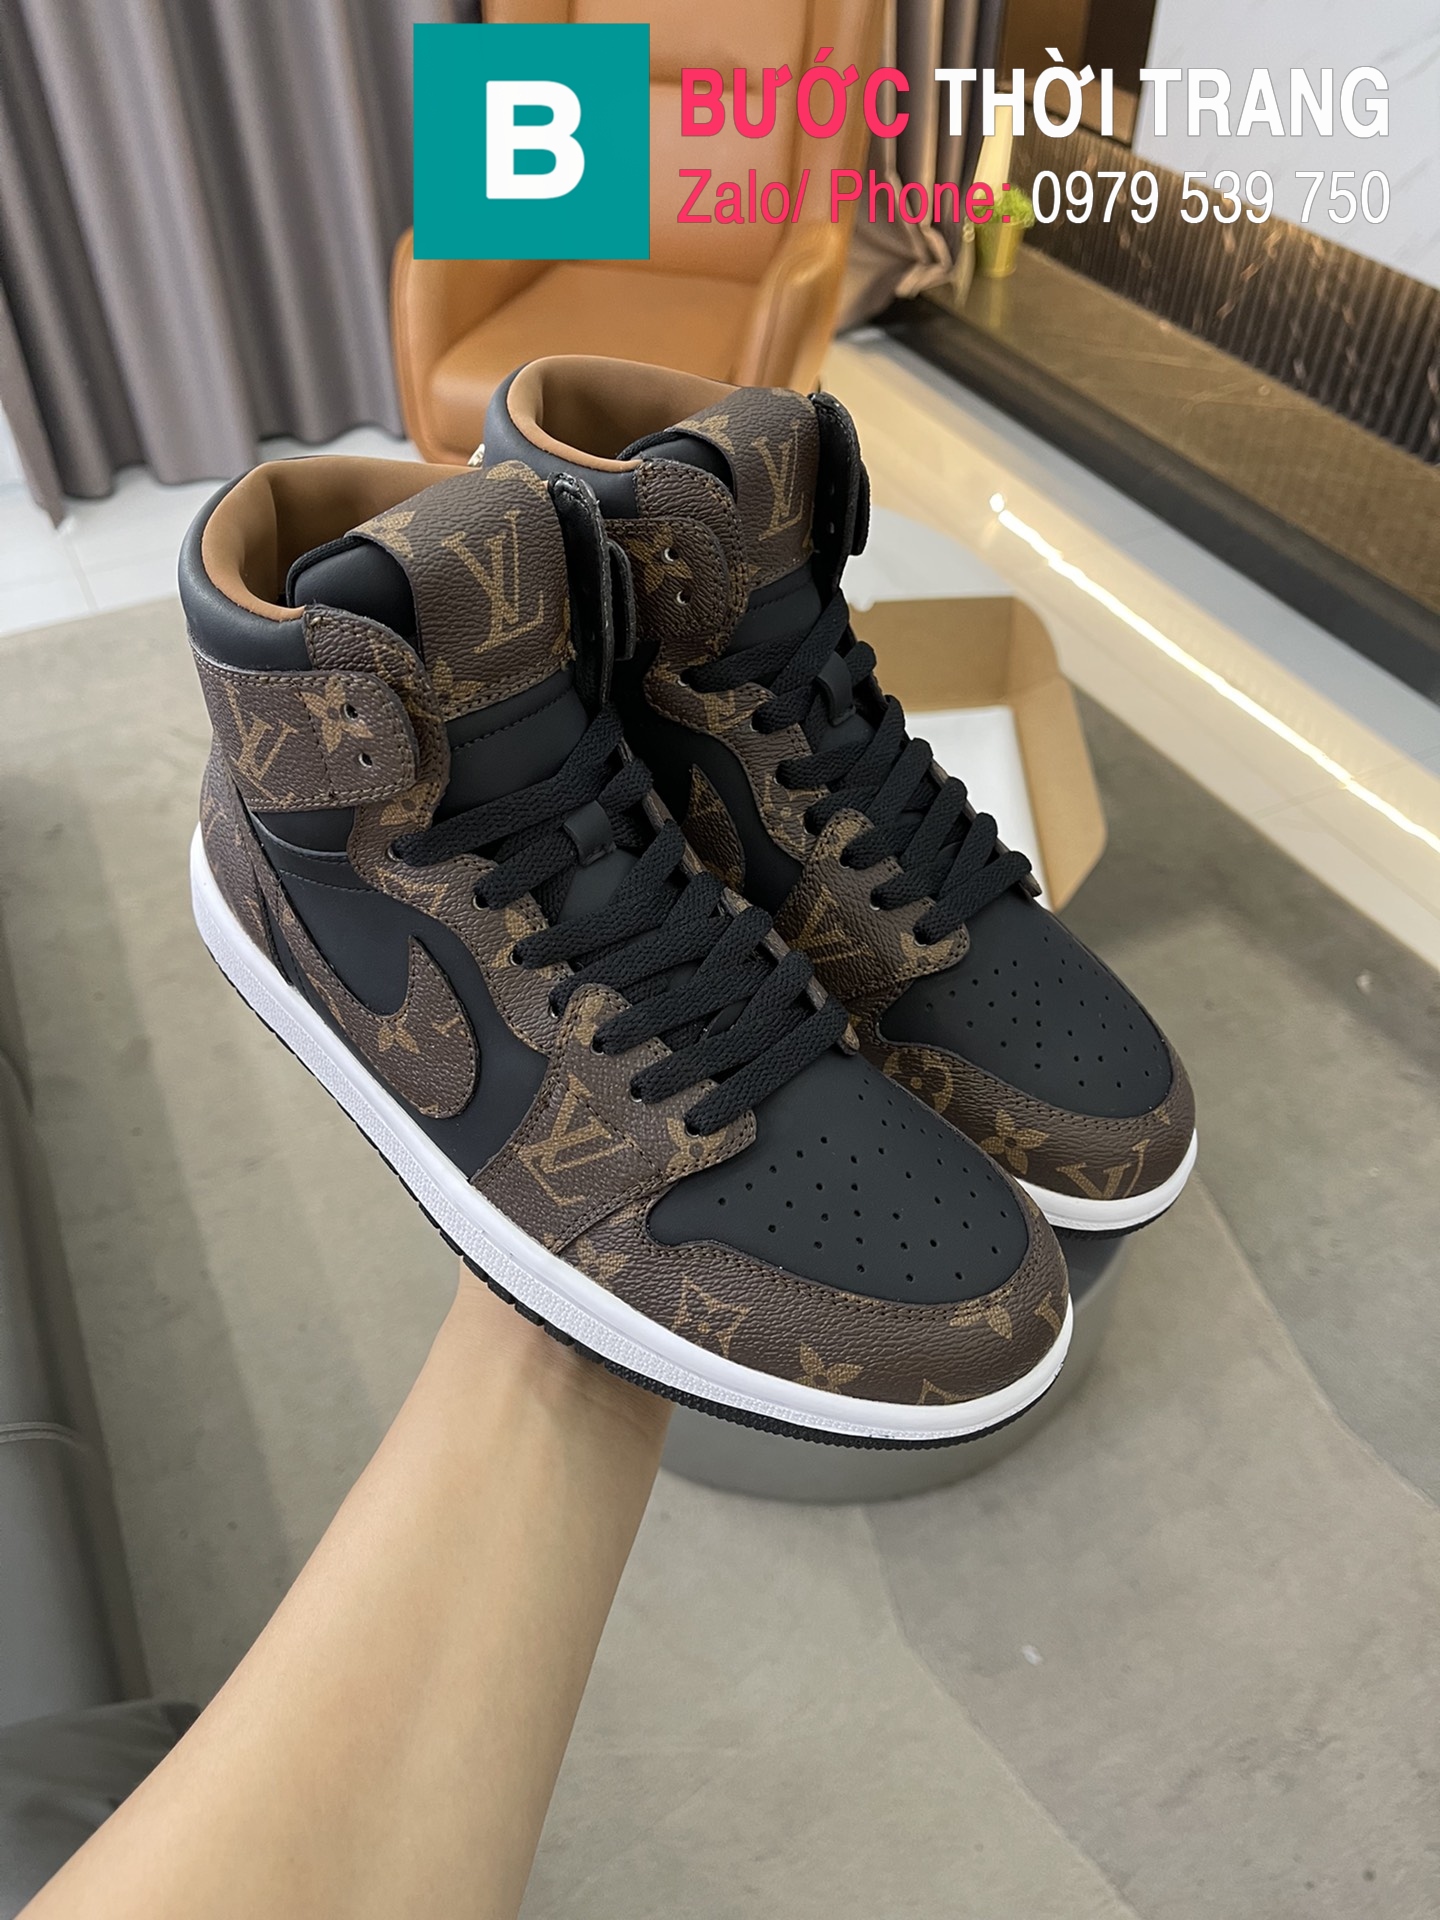 Louis Vuitton OffWhite Nike Air Force 1 Release Info  SneakerNewscom